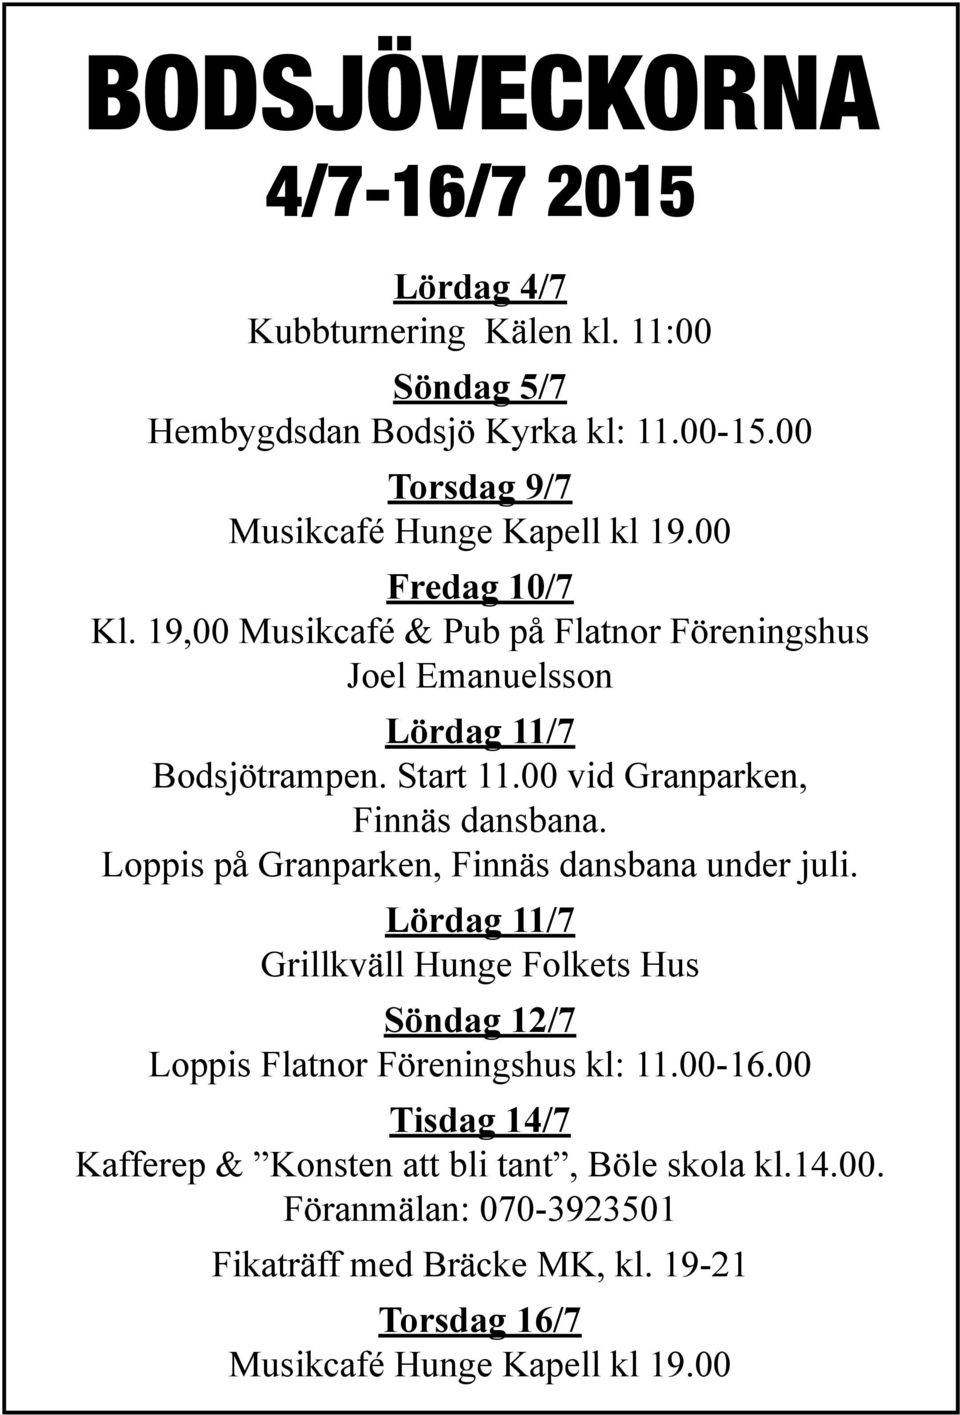 Start 11.00 vid Granparken, Finnäs dansbana. Loppis på Granparken, Finnäs dansbana under juli.